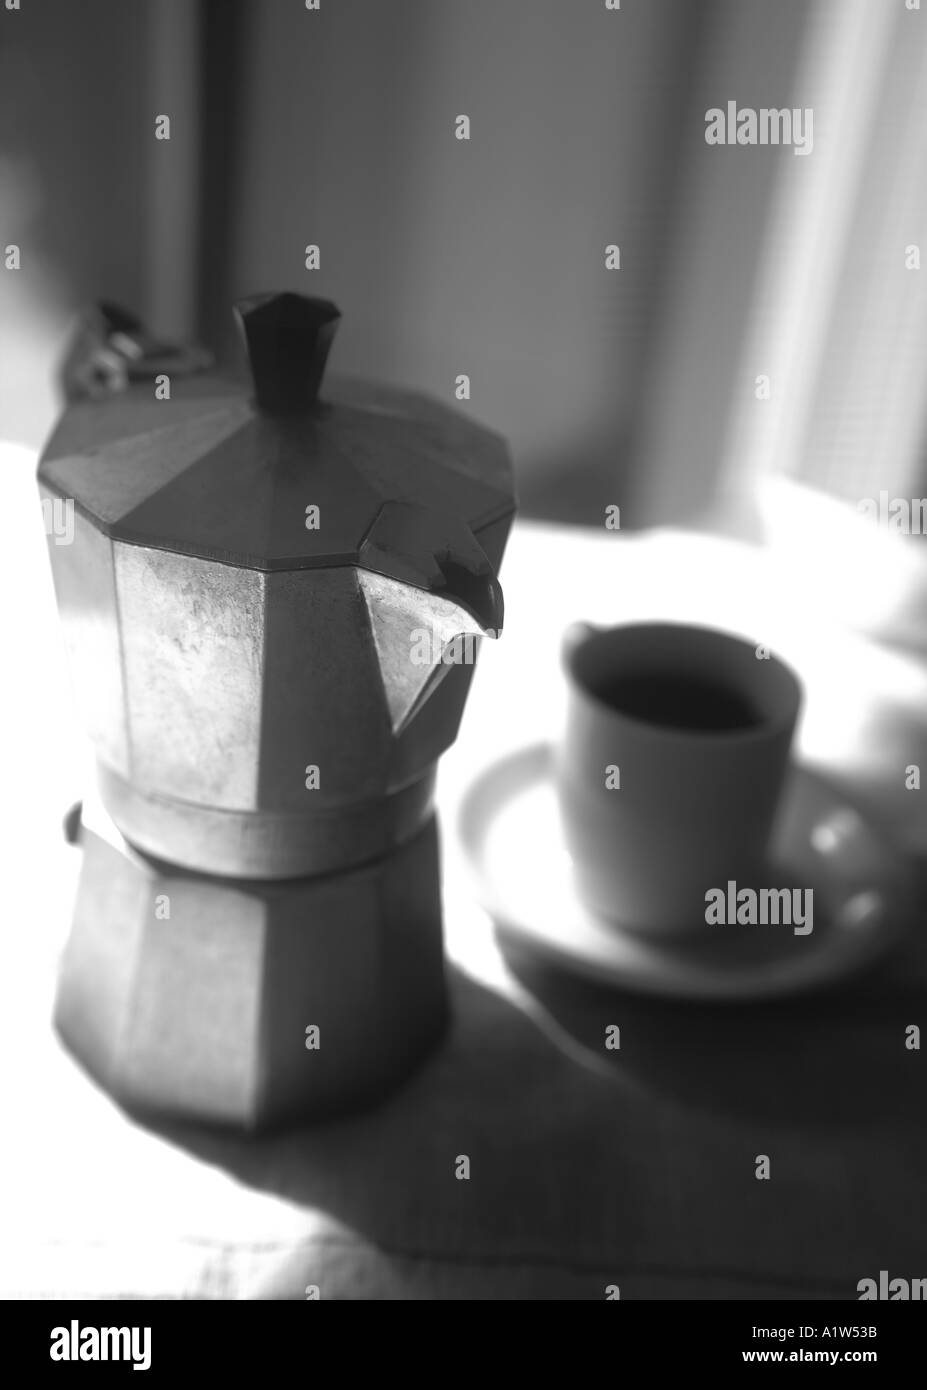 stove top Moka type espresso pot with demi-tasse cup Stock Photo